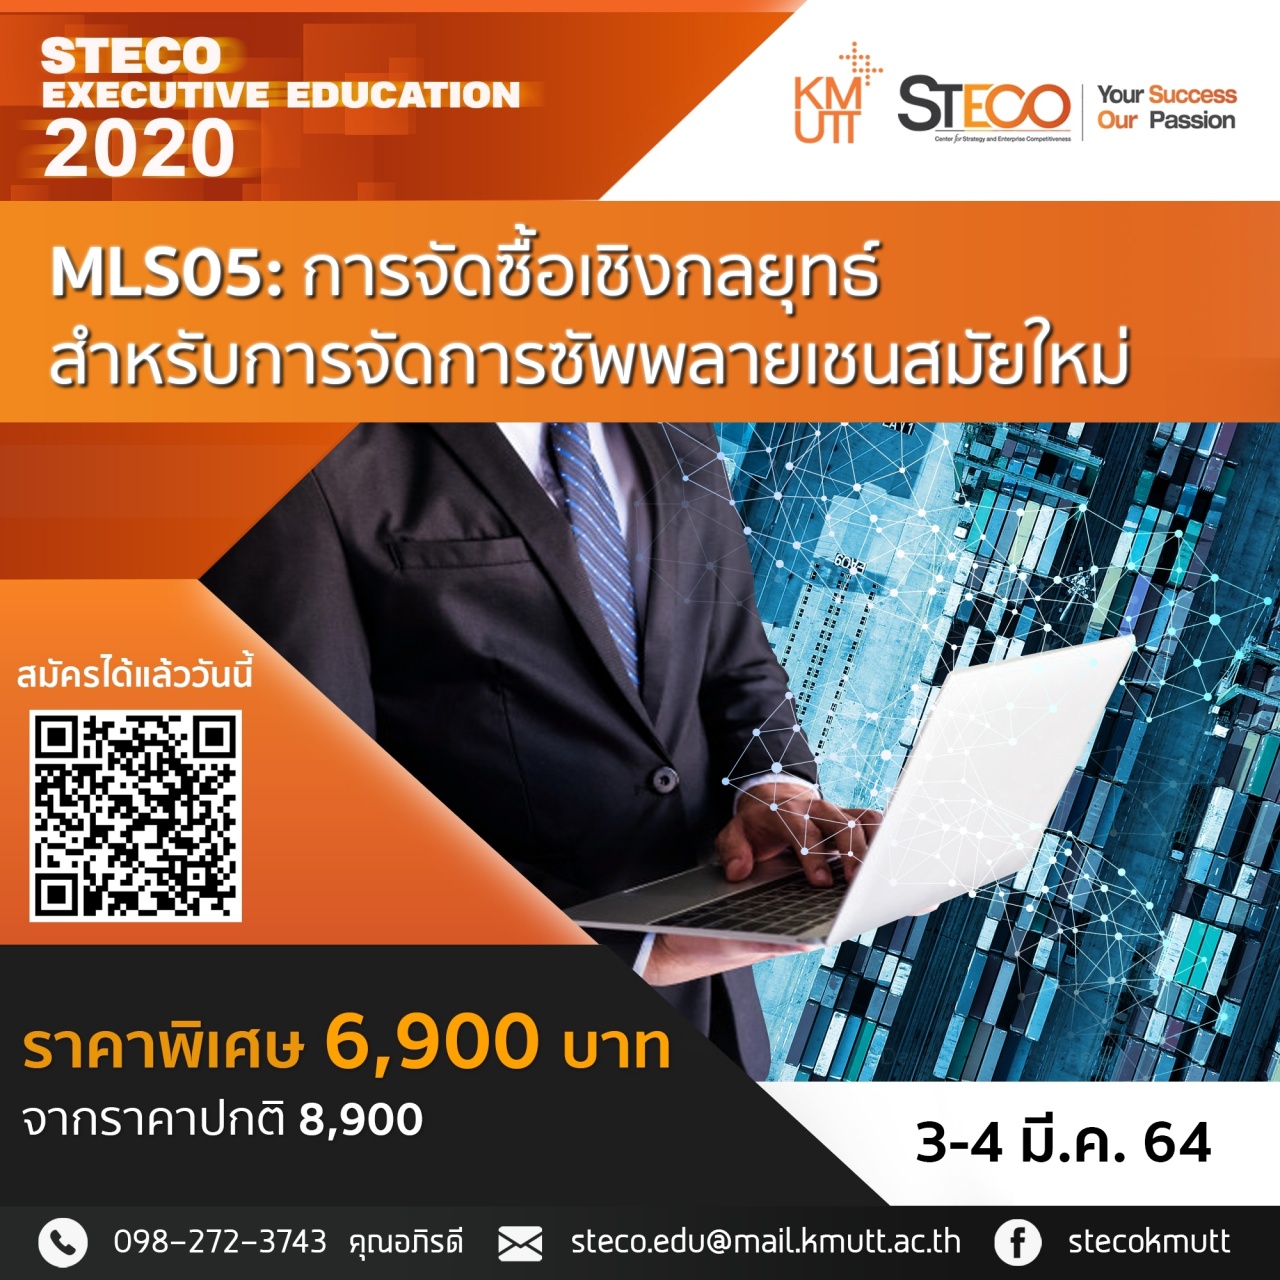 MLS05: Strategic Procurement in Modern Supply Chain Management (การจัดซื้อเชิงกลยุทธ์สำหรับการจัดการซัพพลายเชนสมัยใหม่)